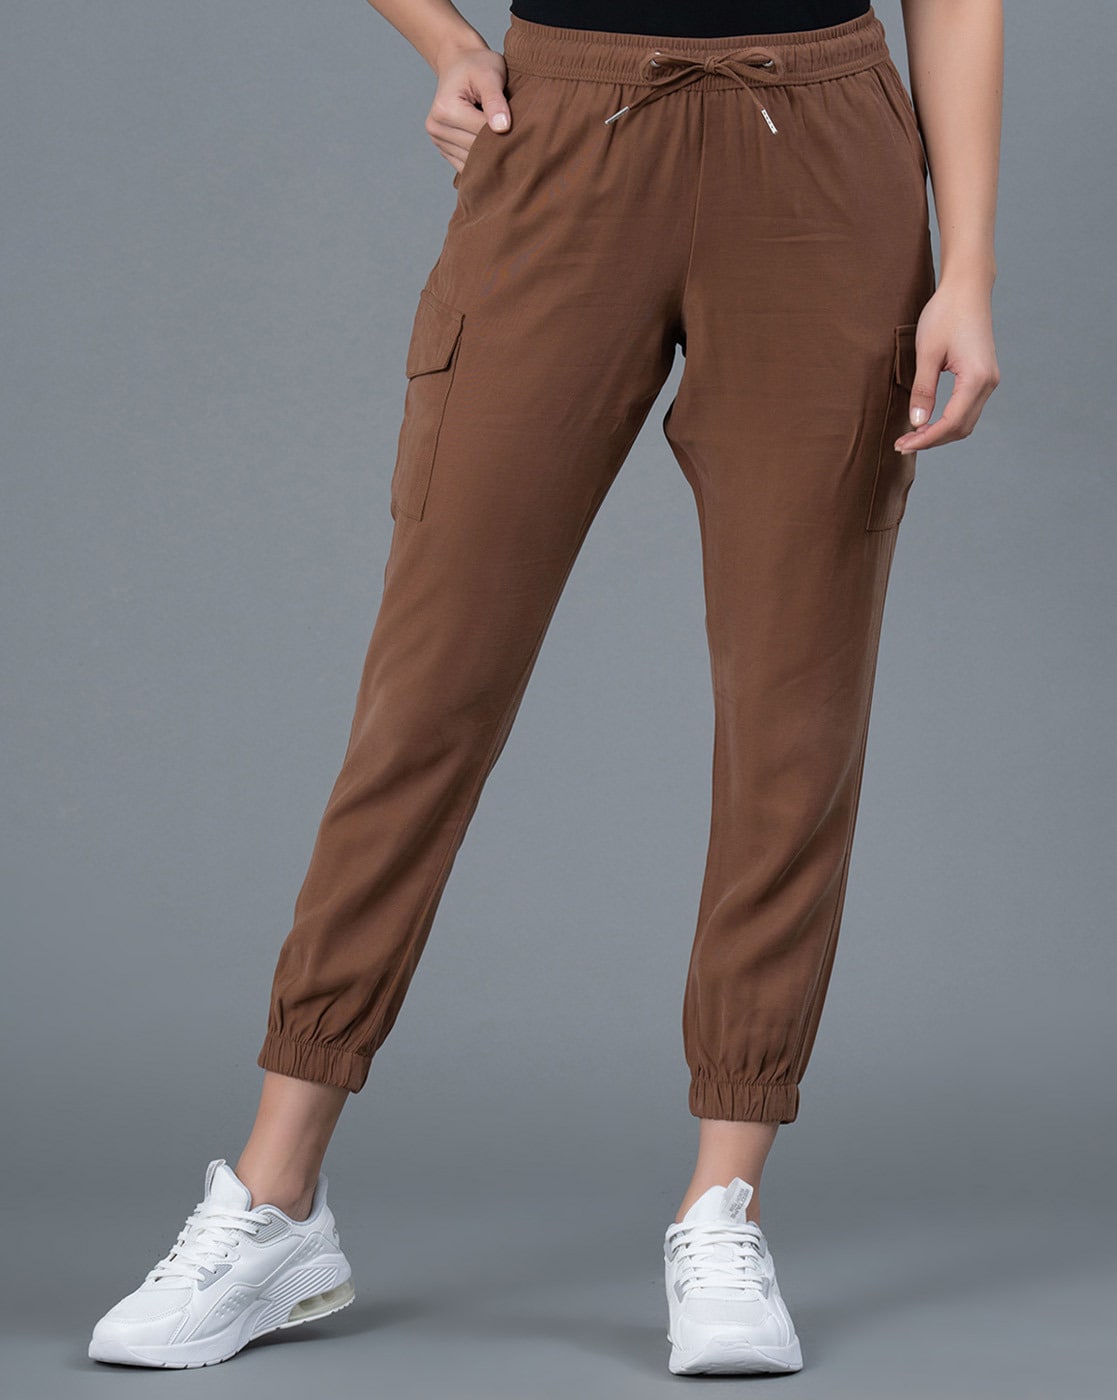 Buy Red Trousers  Pants for Women by TRUSER Online  Ajiocom